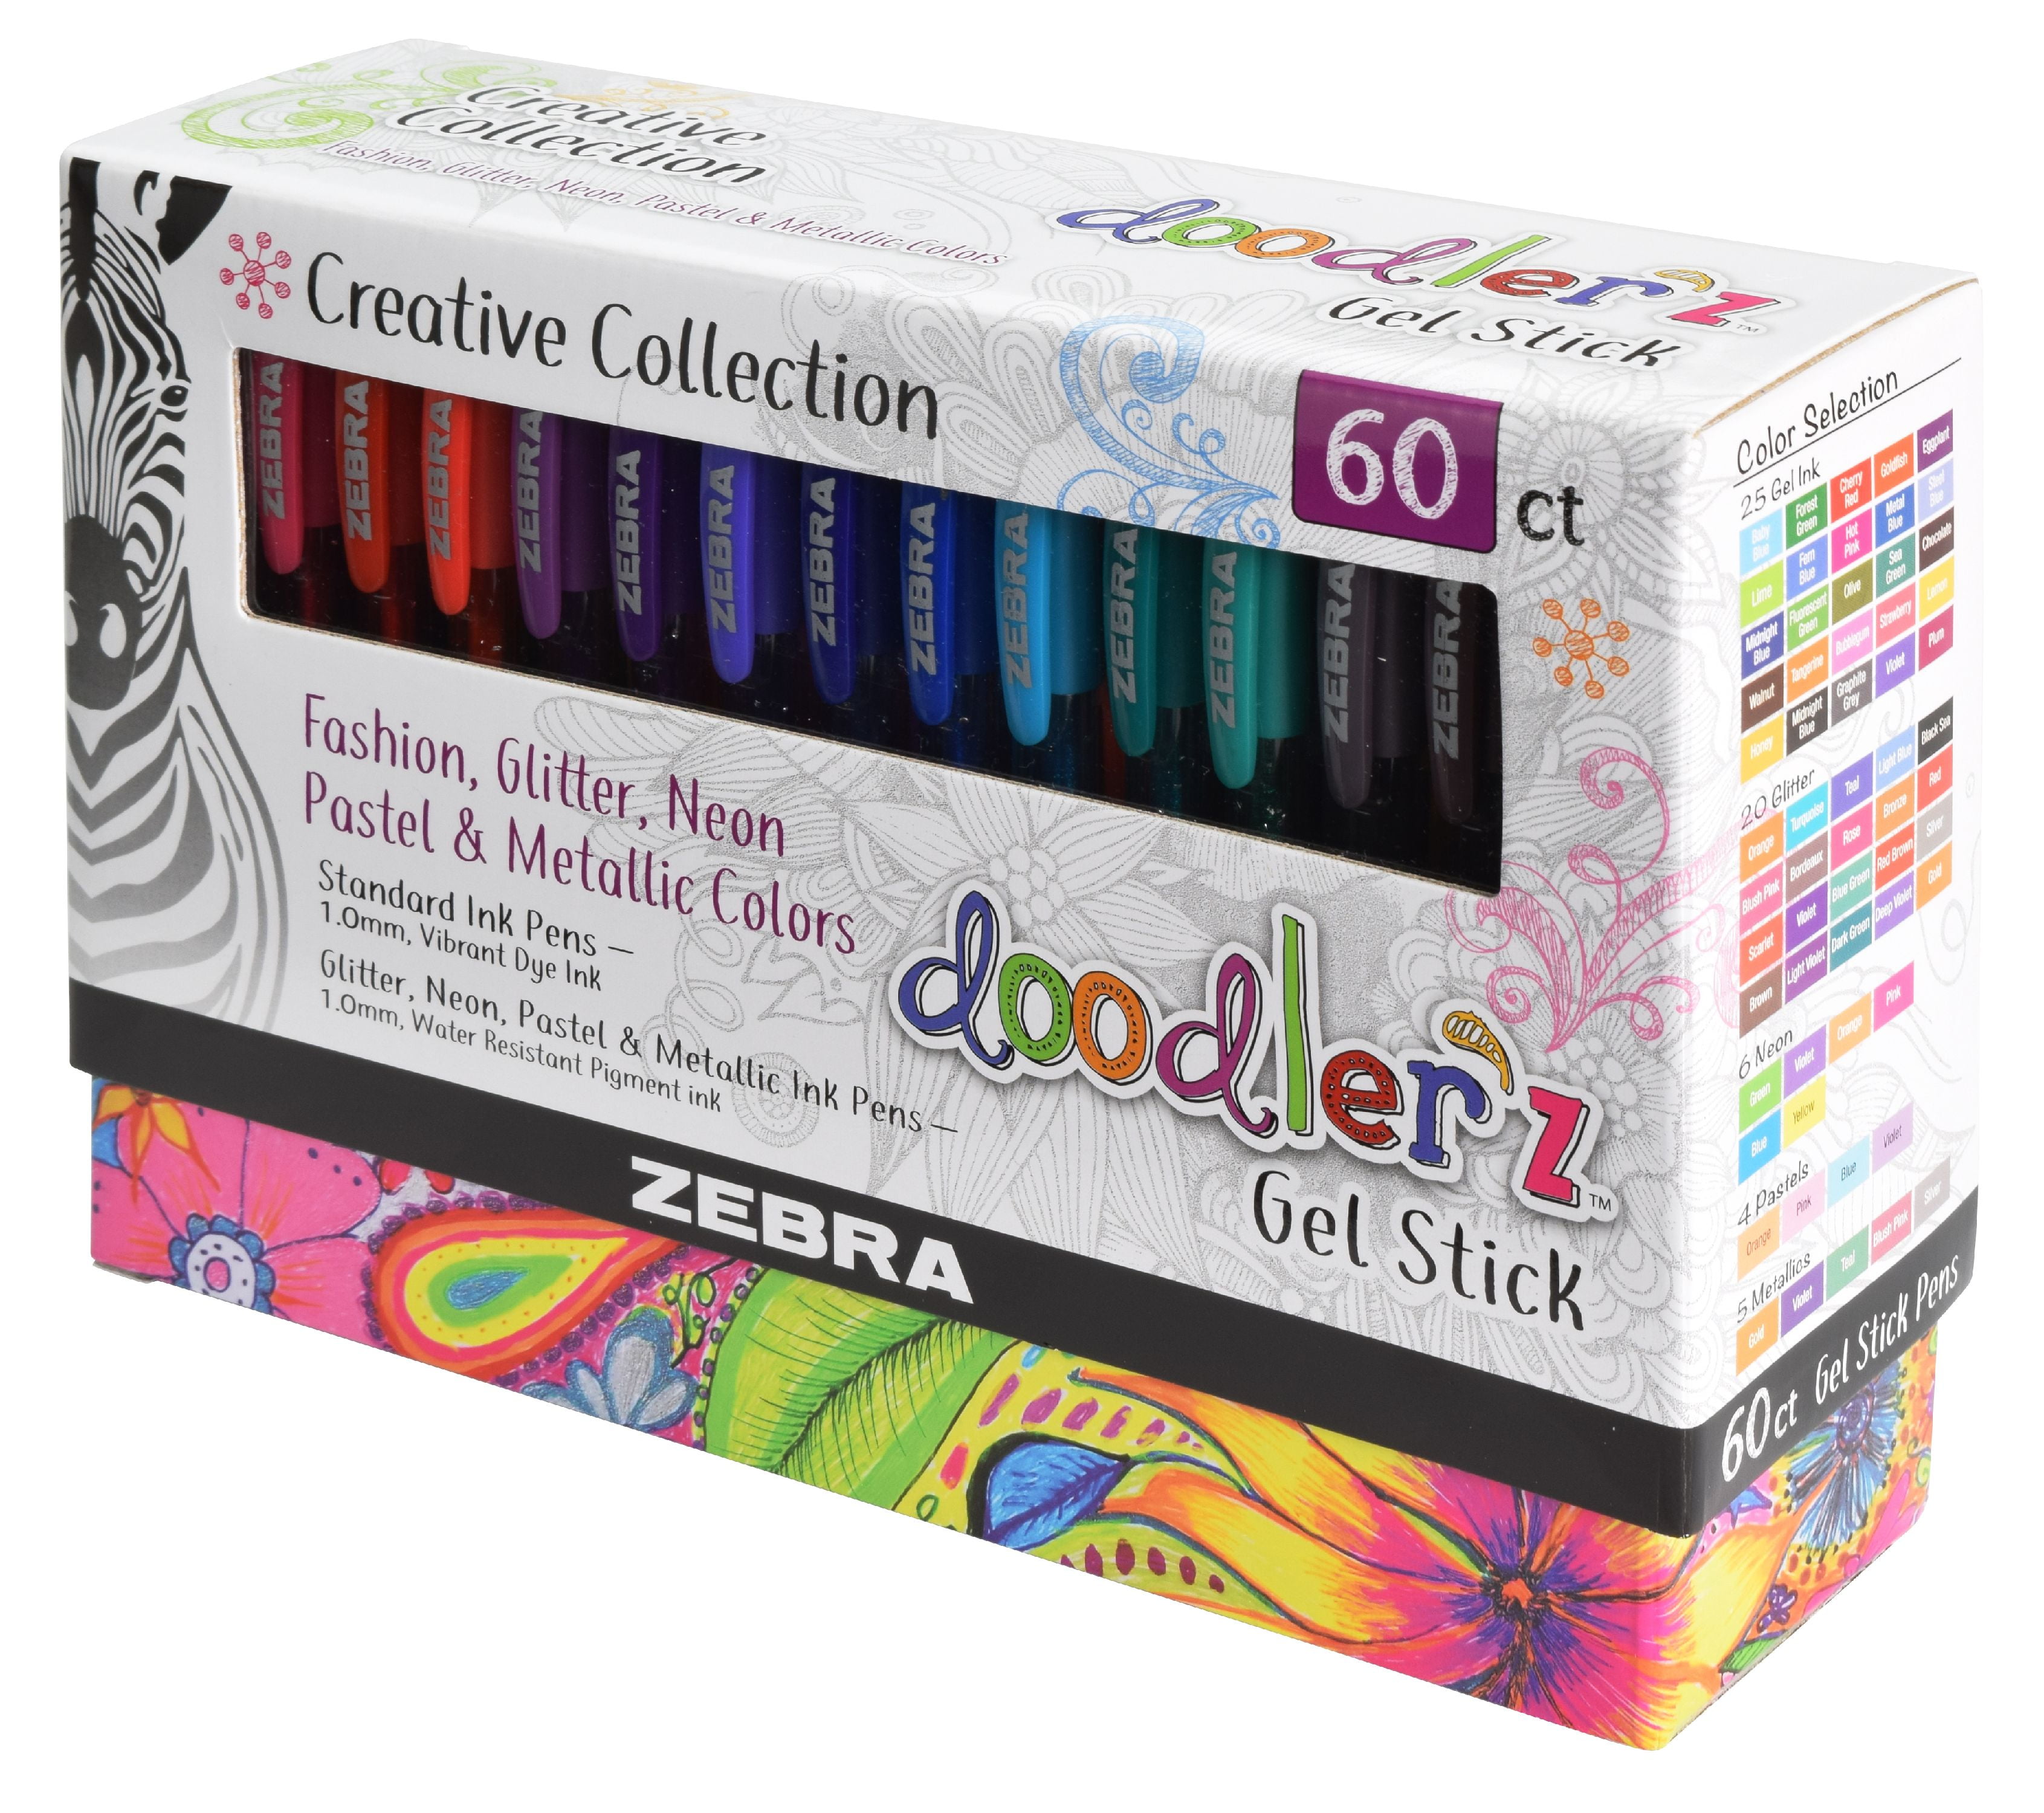 Doodlerz Dual Tip Brush Pens - by Zebra